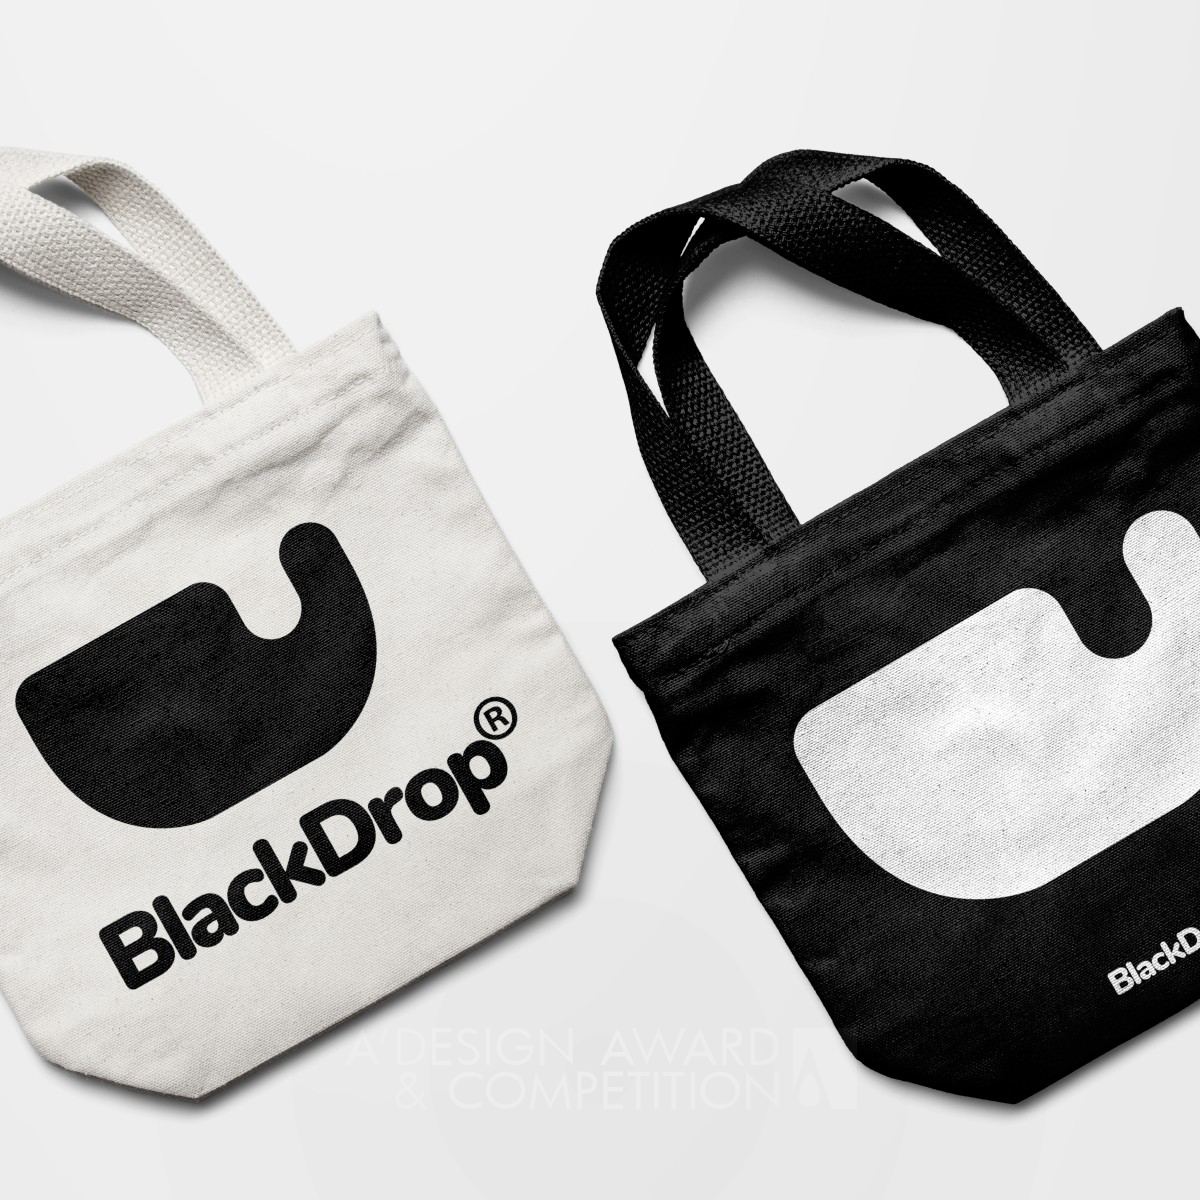 BlackDrop Brand Identity by Aleks Brand